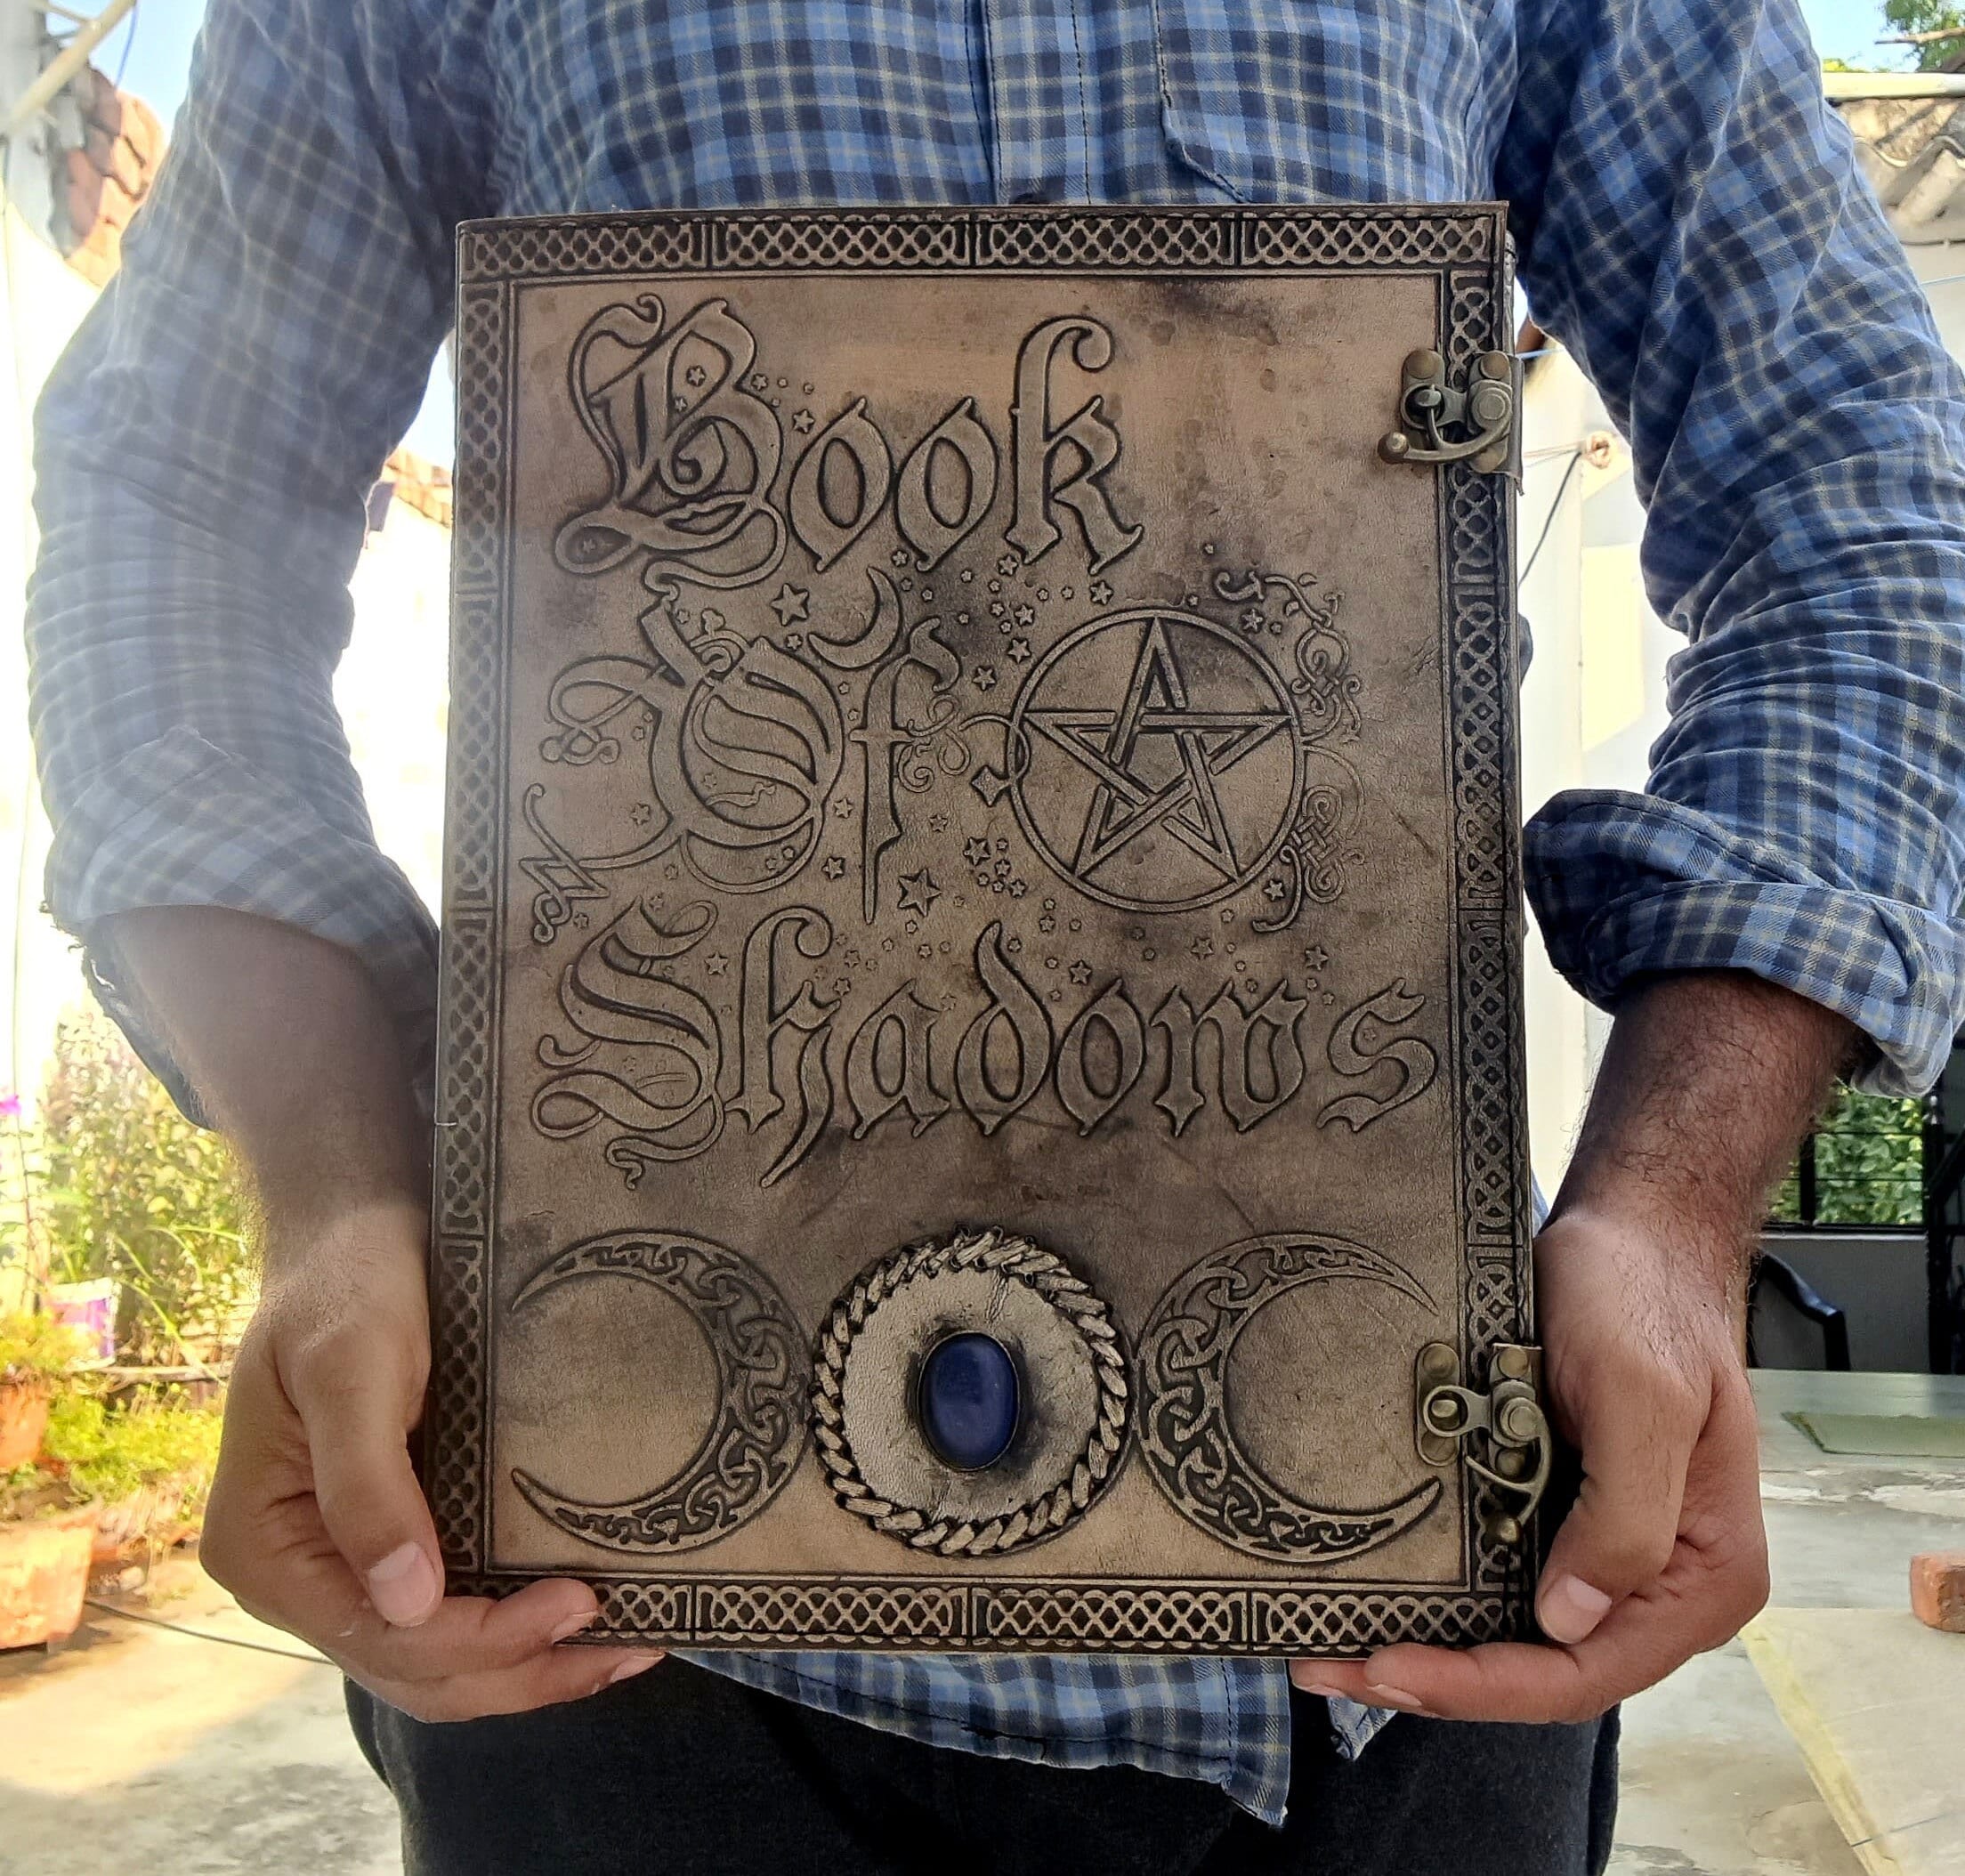 Huge Big Grimoire Pentagram Leather Spell Book of Shadows 